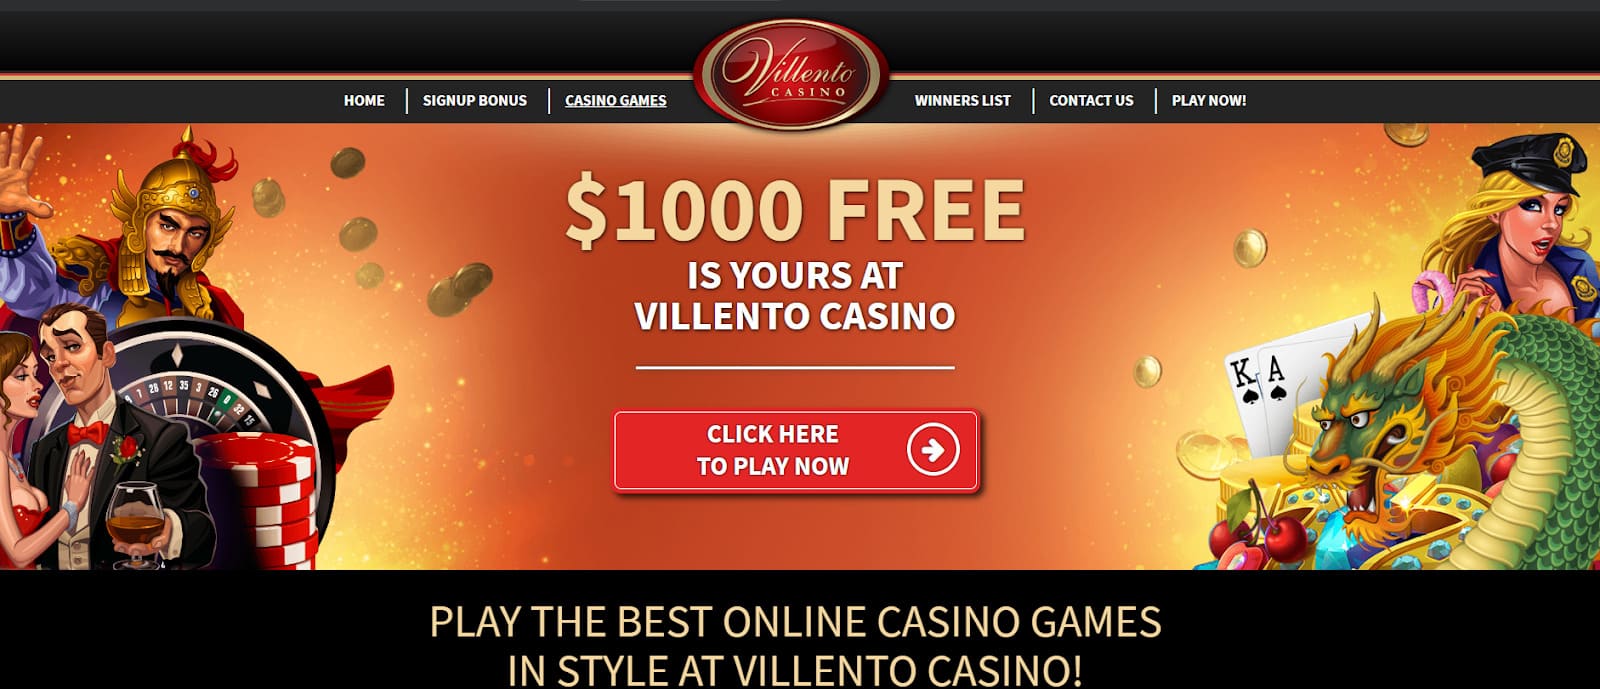 Villento Casino Games